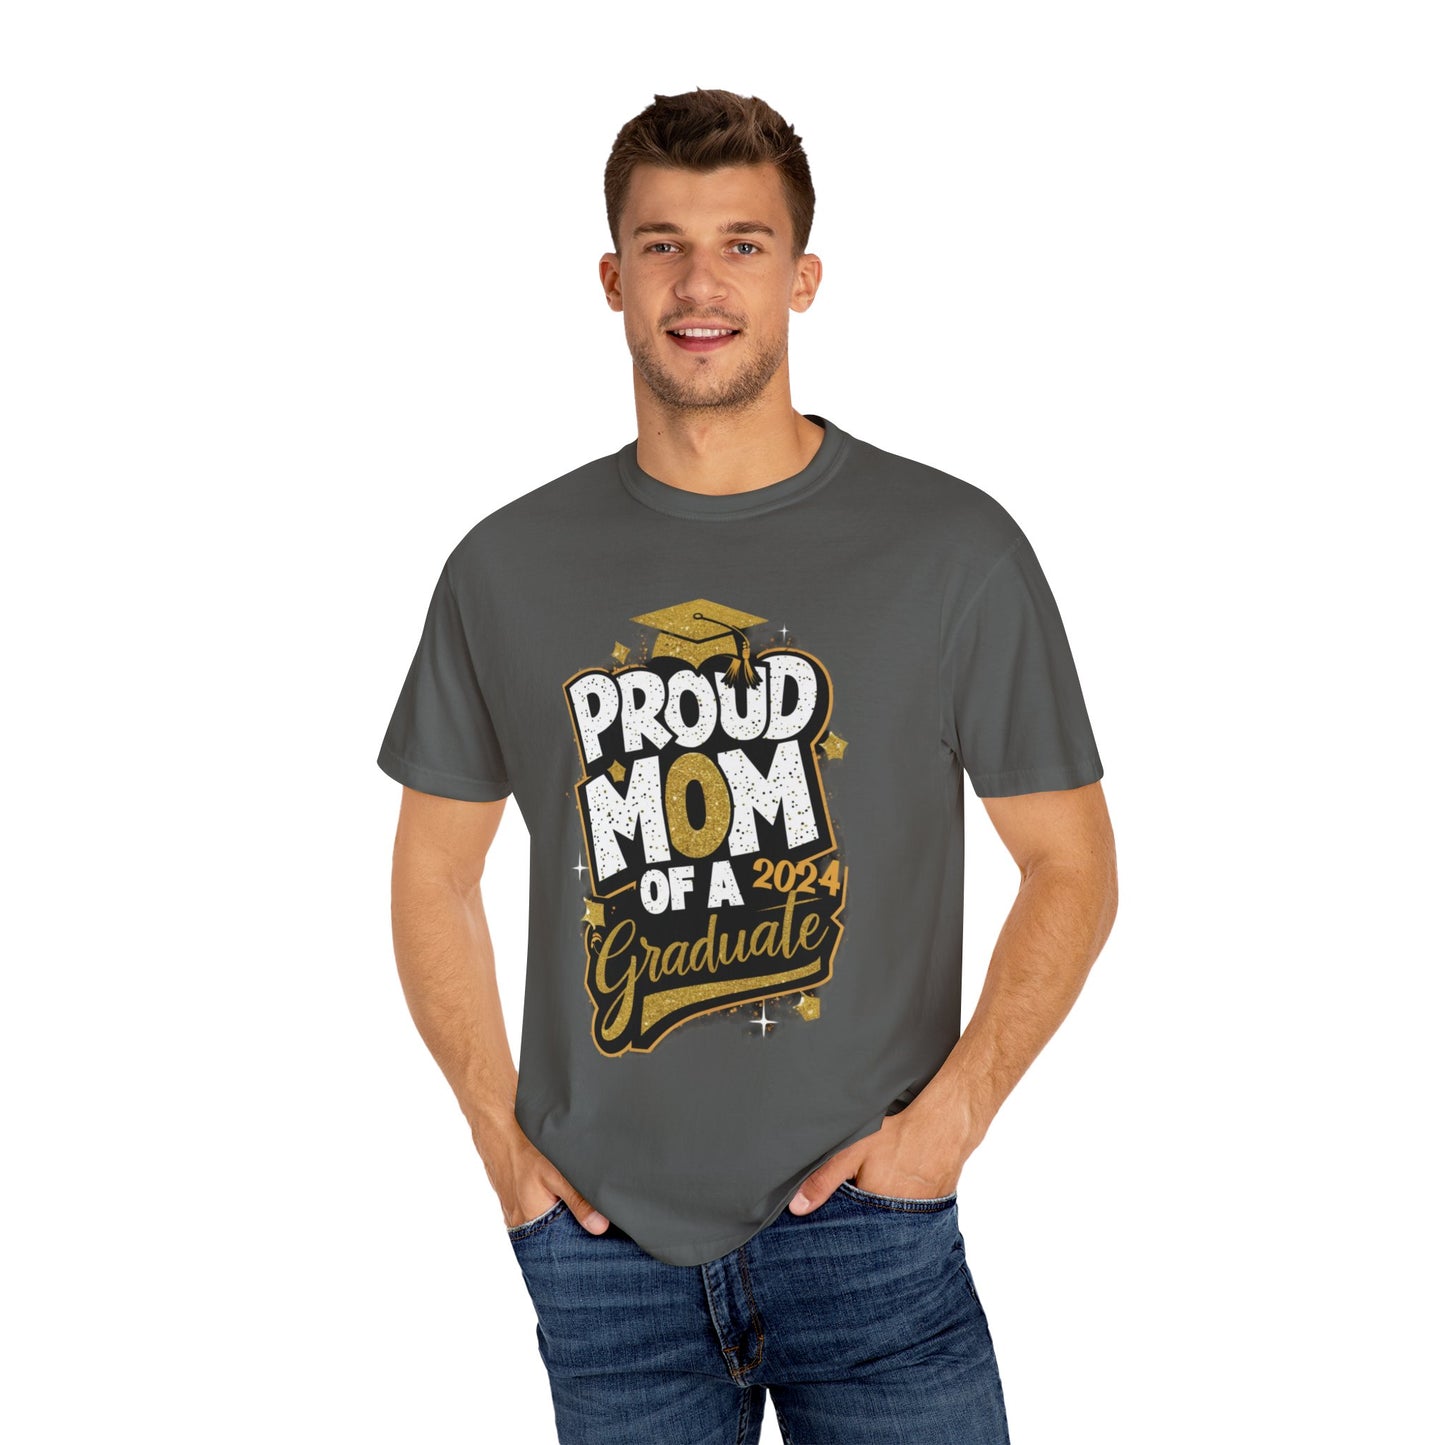 Proud Mom of a 2024 Graduate Unisex Garment-dyed T-shirt Cotton Funny Humorous Graphic Soft Premium Unisex Men Women Pepper T-shirt Birthday Gift-51